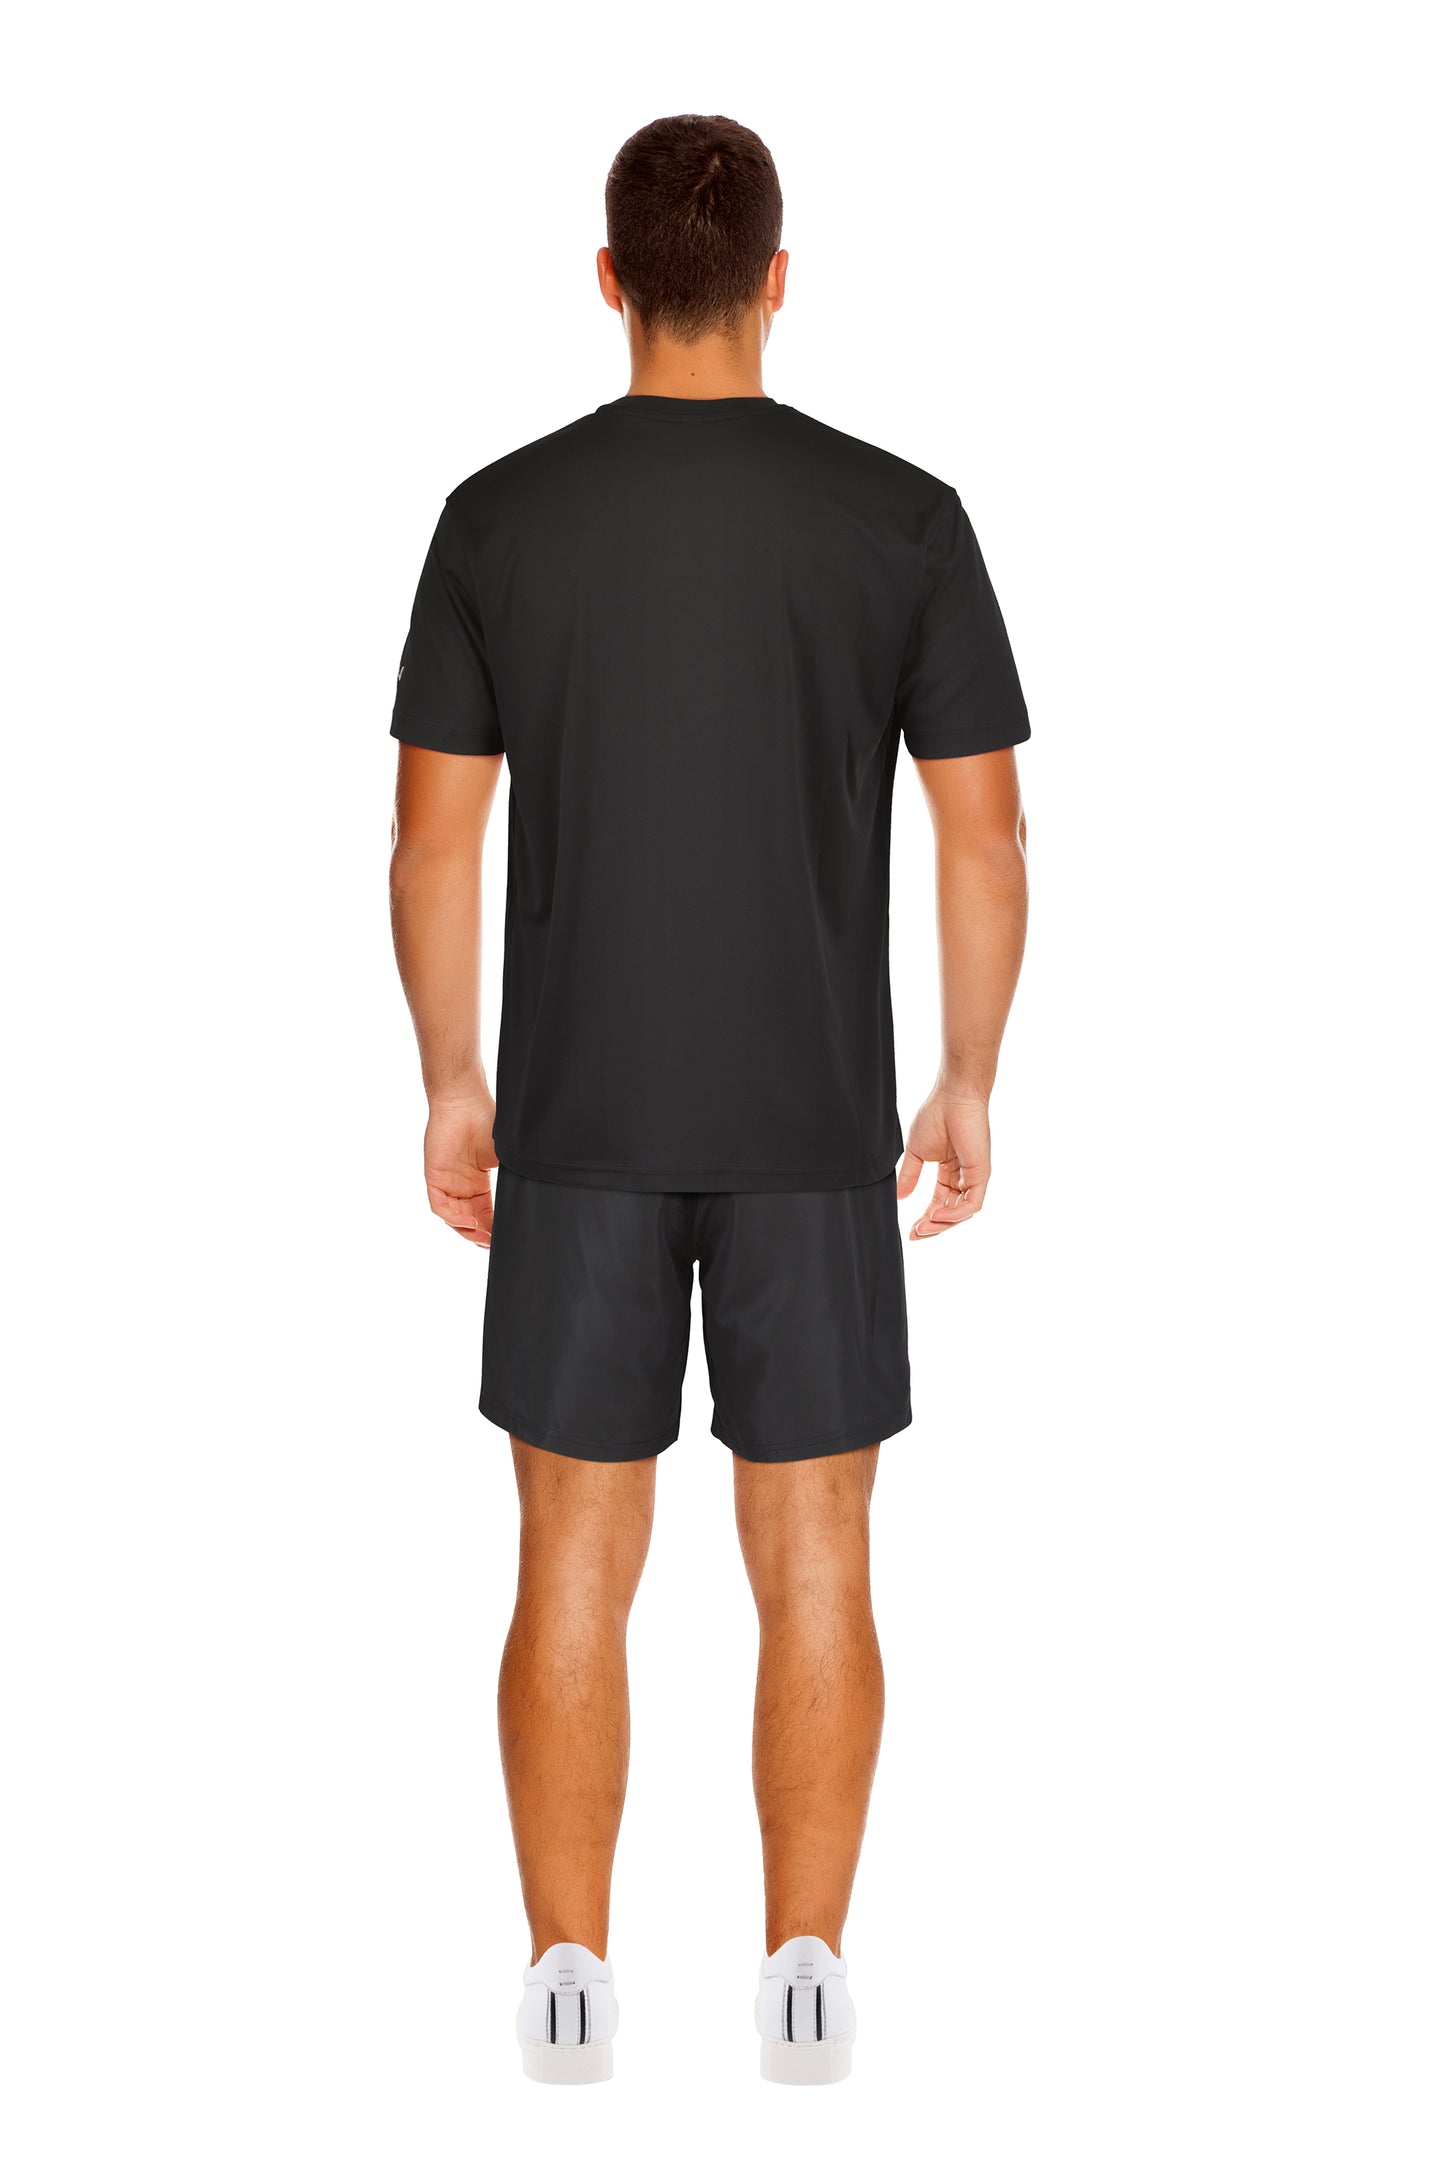 AEON Padel Performance T-Shirt - Black